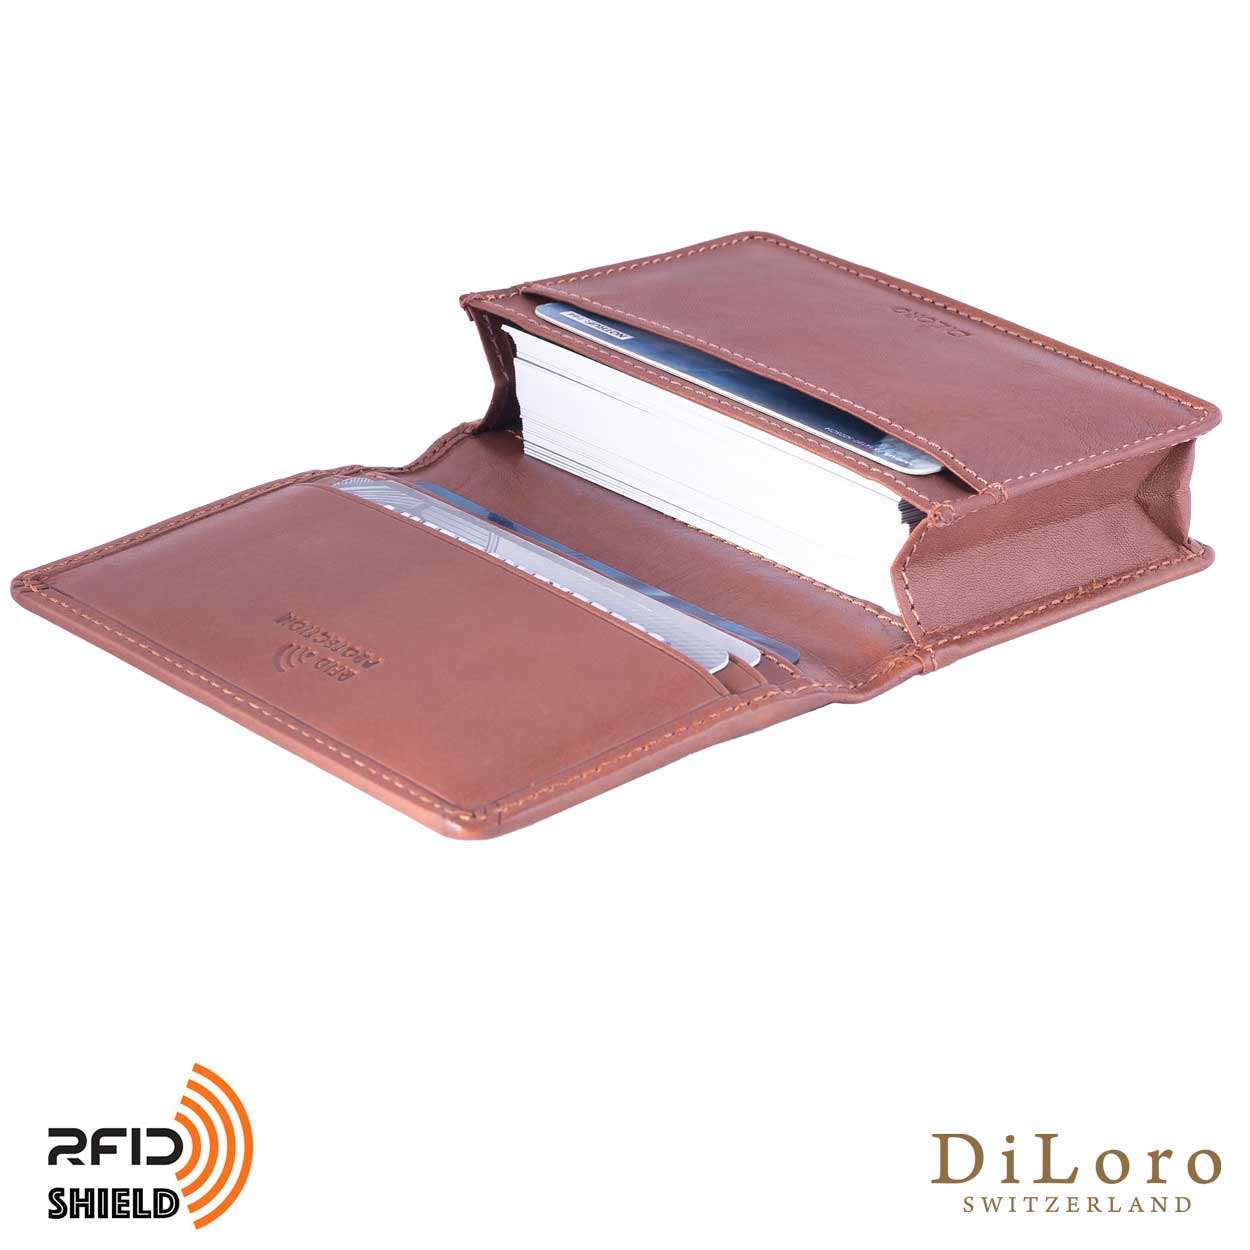 DiLoro Italy RFID Blocking Bifold Slim Genuine Leather Business Card Wallet Bugatti Tan - Open, Inside View